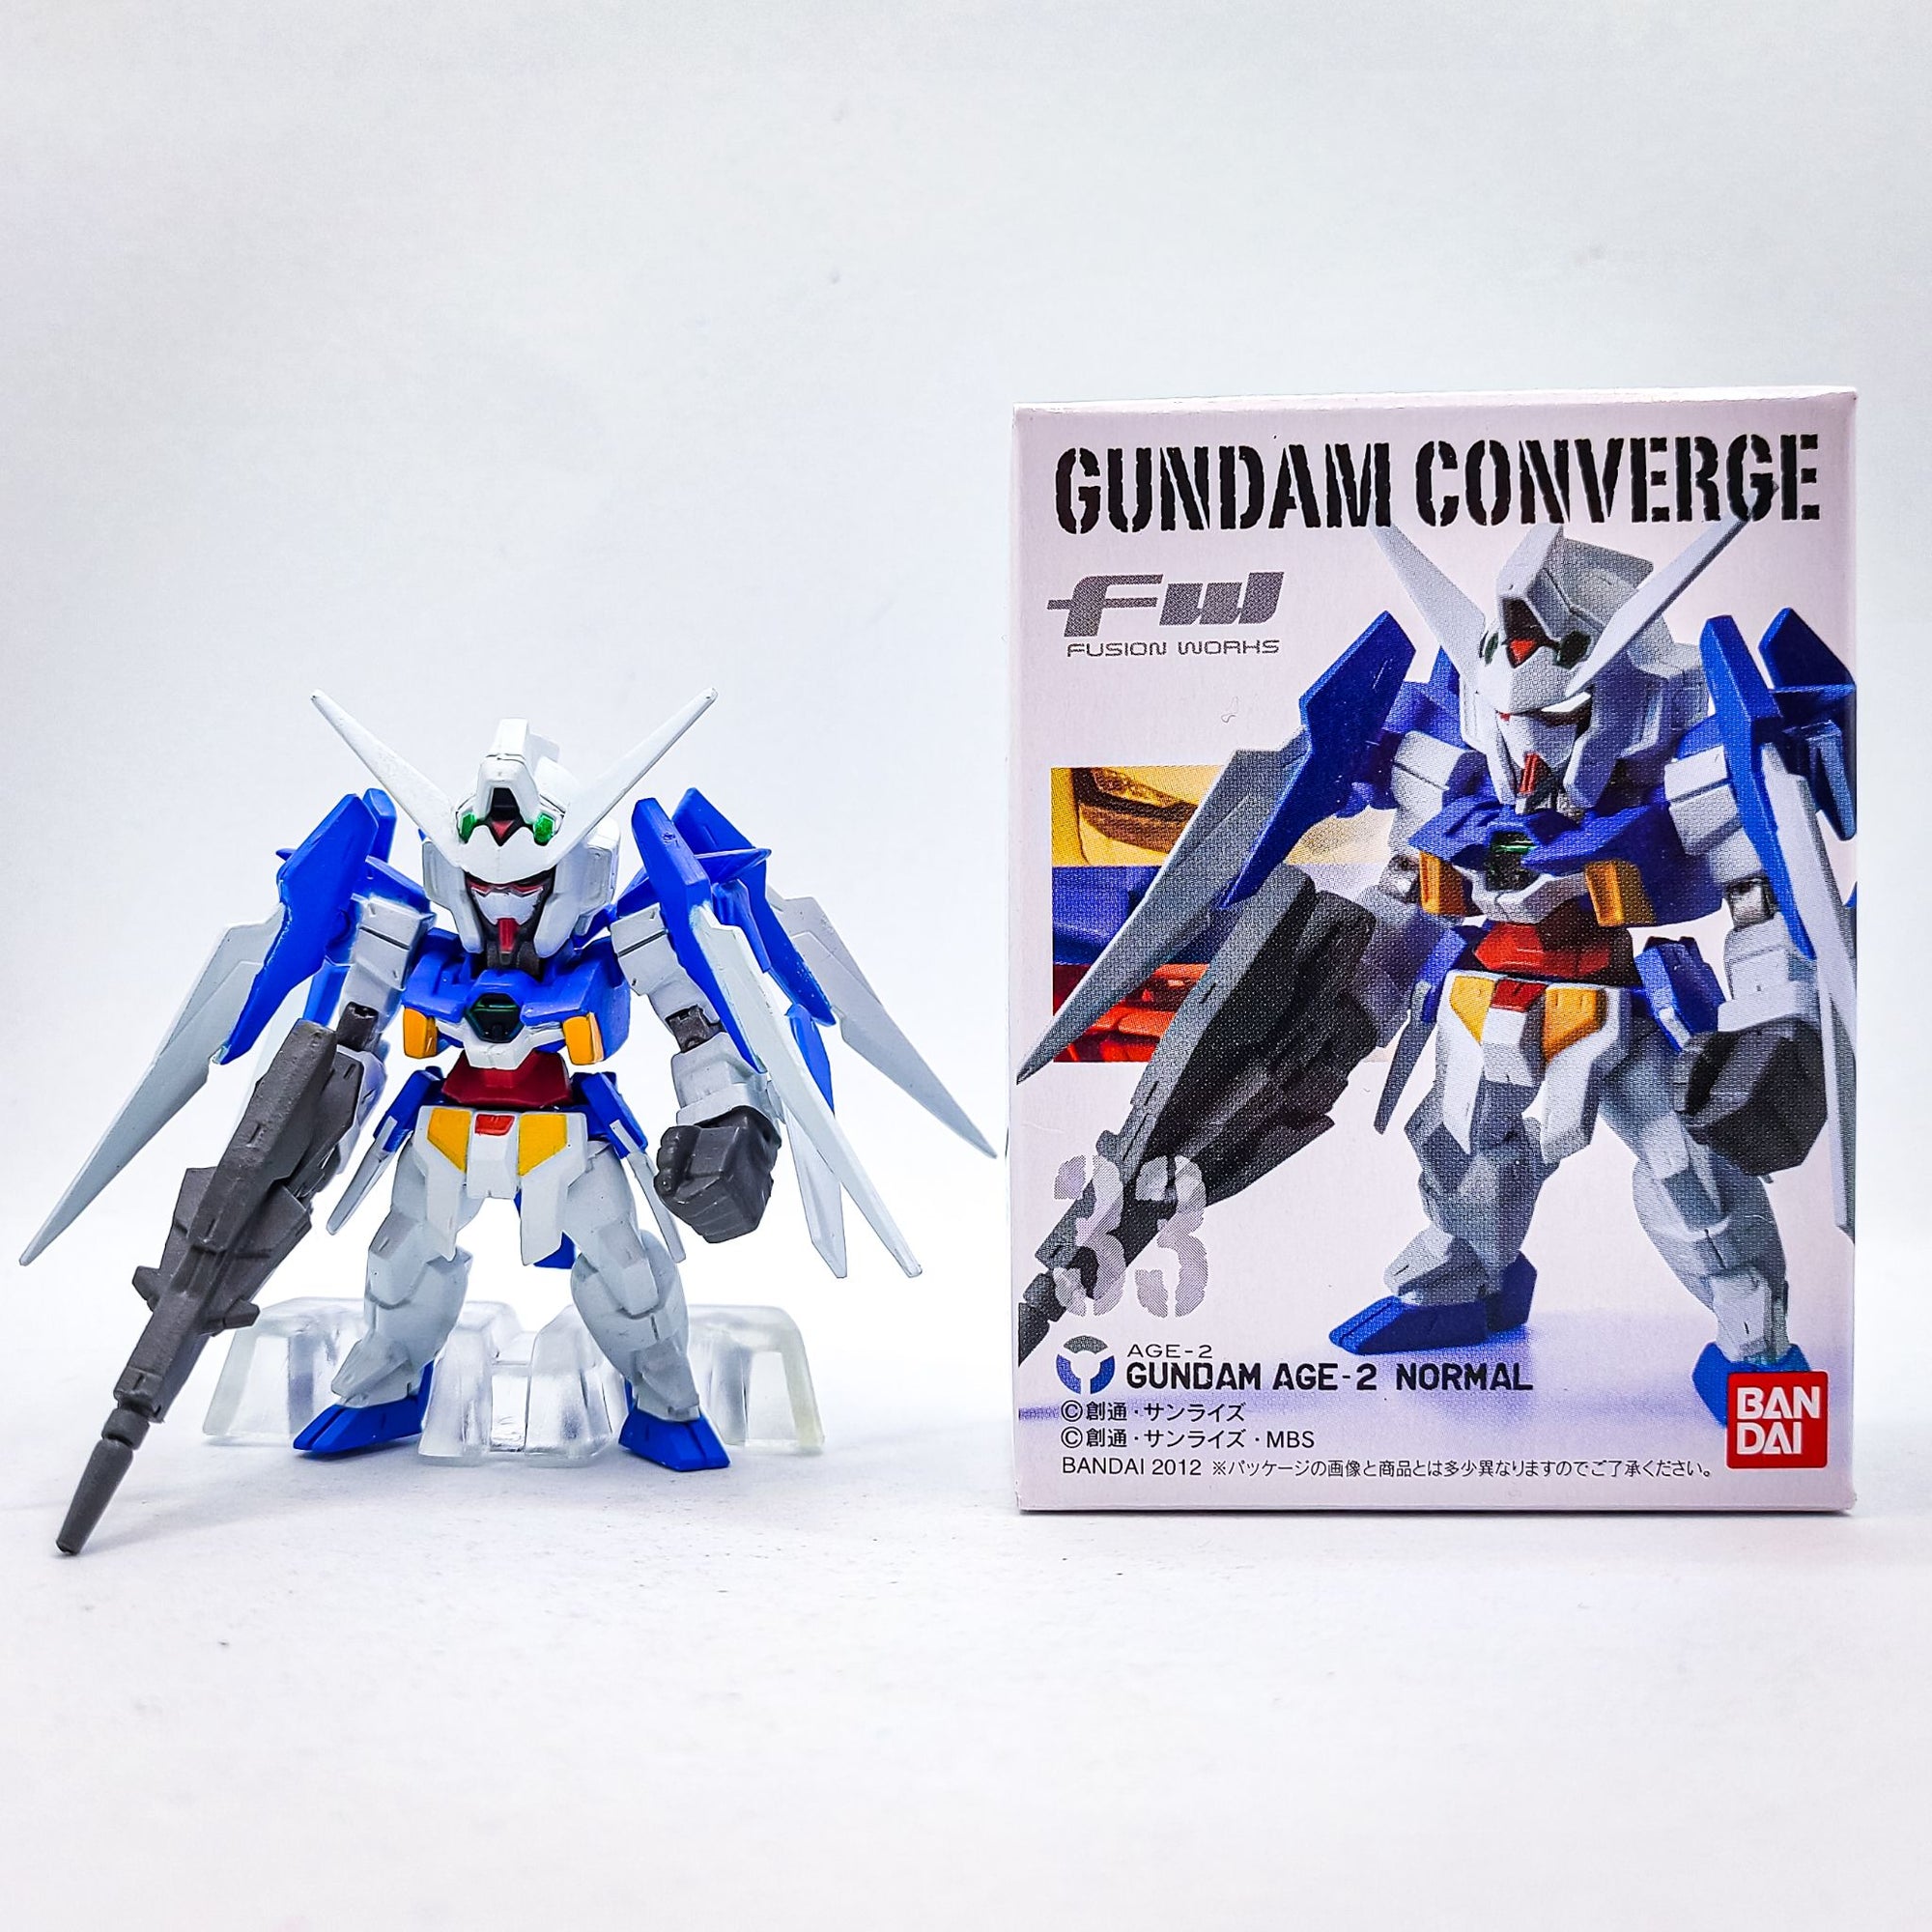 Gundam Converge #33 Gundam AGE-2 NORMAL by Bandai - 3